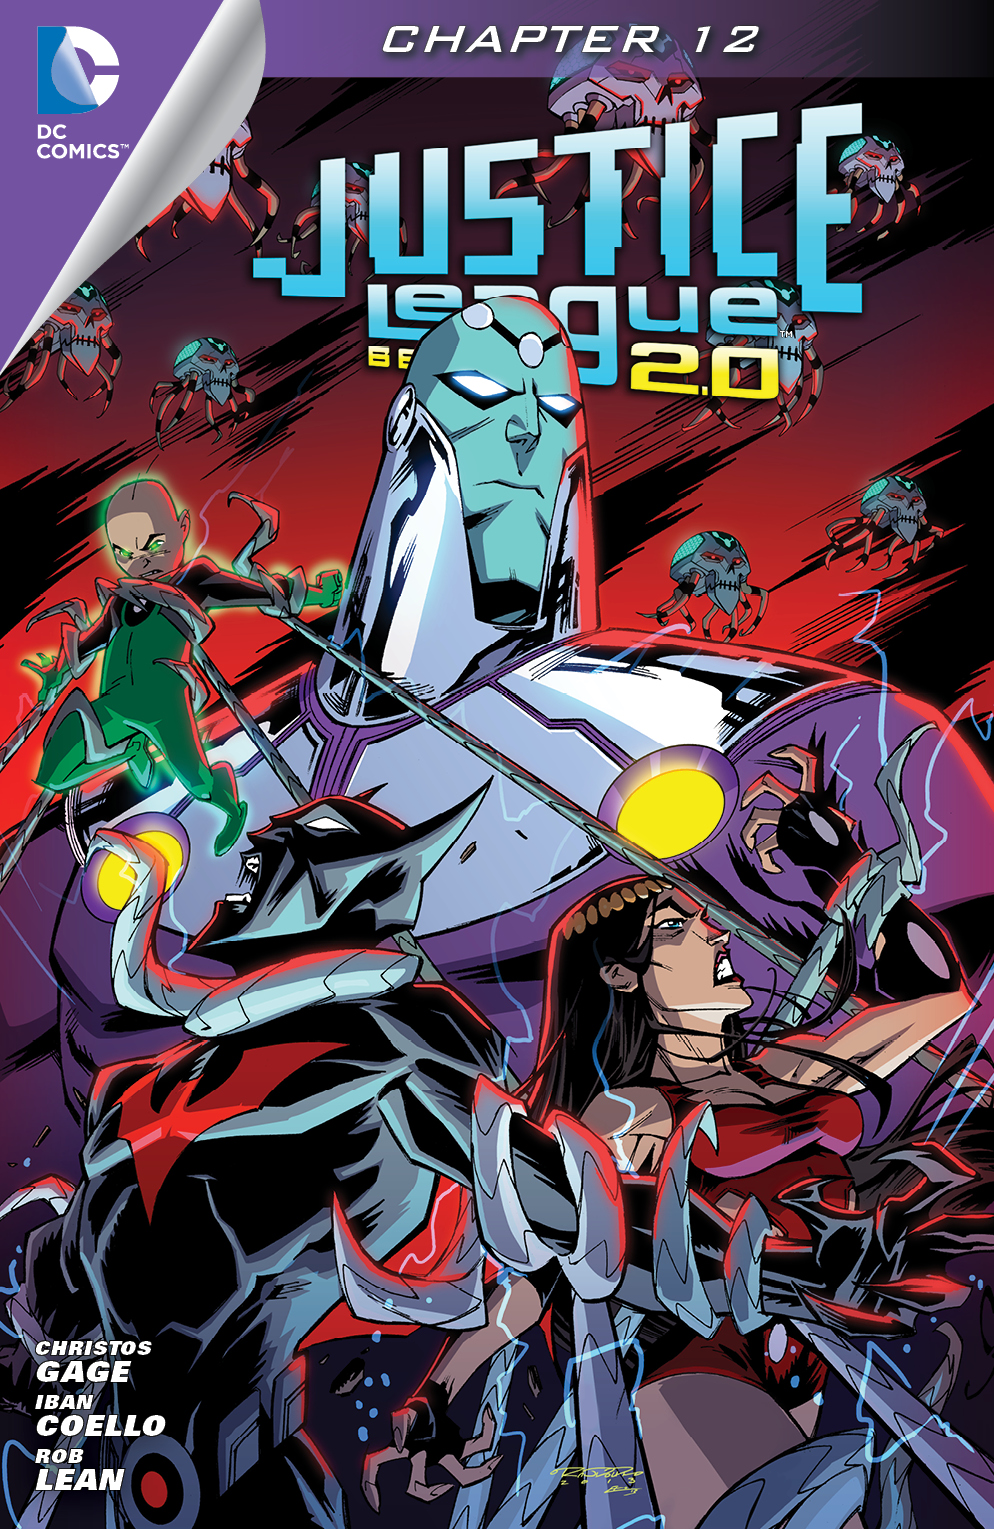 Justice League Beyond 2.0 #12 preview images